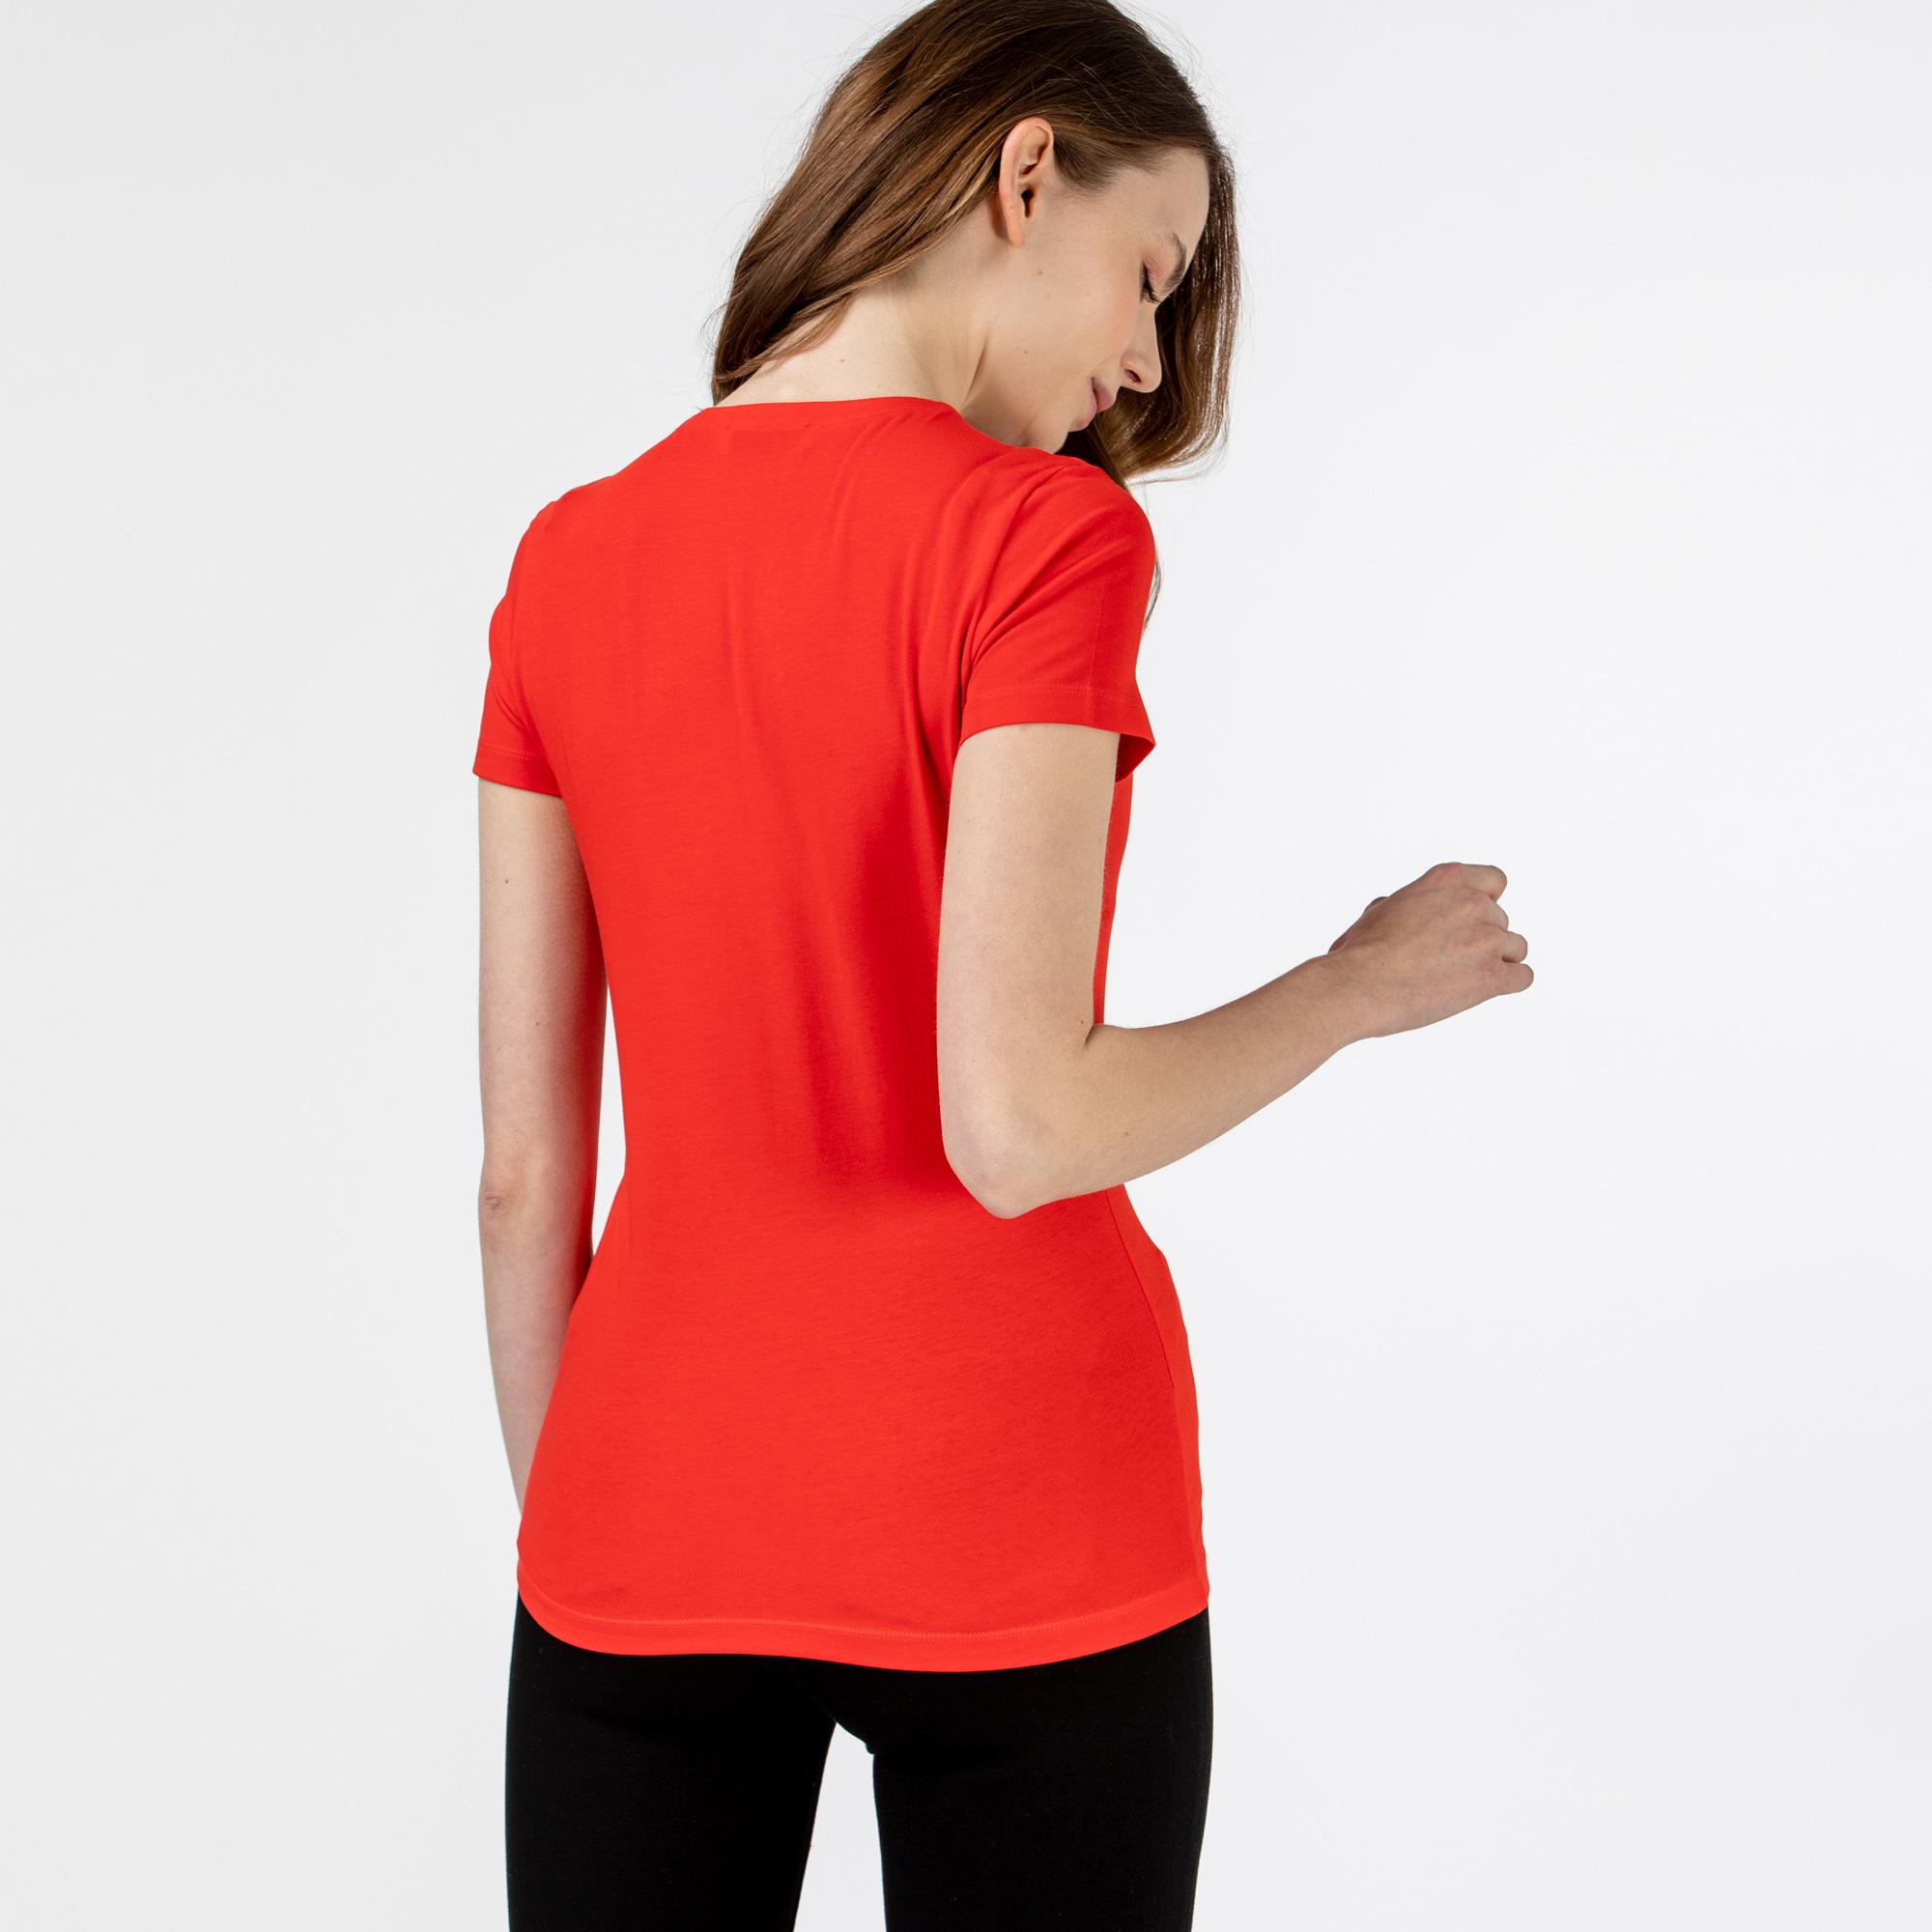 Lacoste Kadın Slim Fit V Yaka Kırmızı T-Shirt. 6